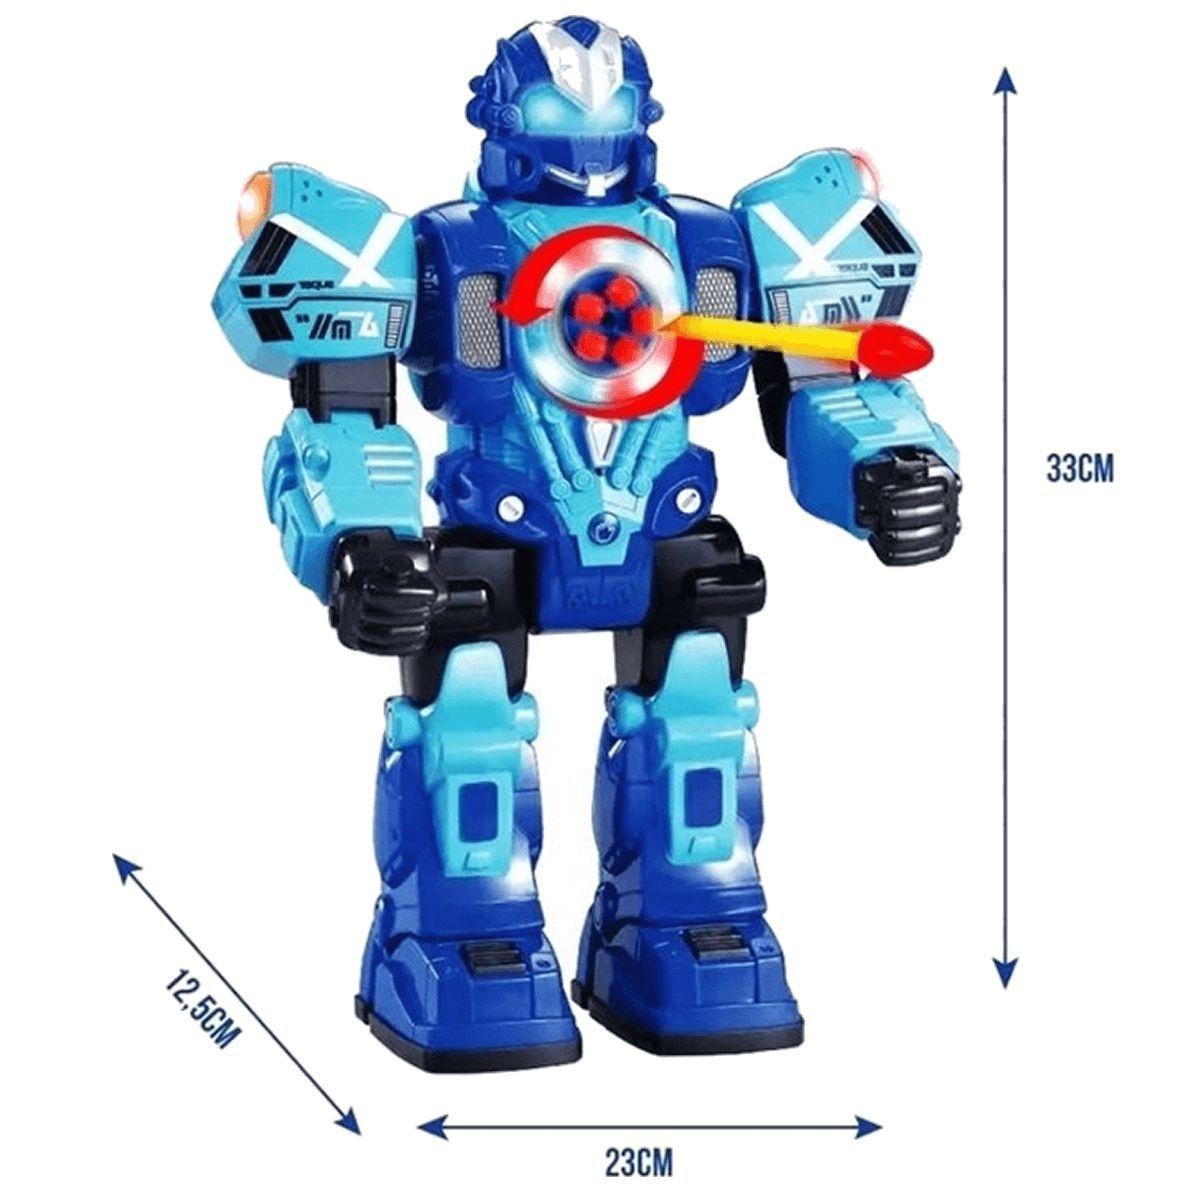 Robô Com Controle Remoto Iron Soldier Azul Havan Toys - DIVERSOS